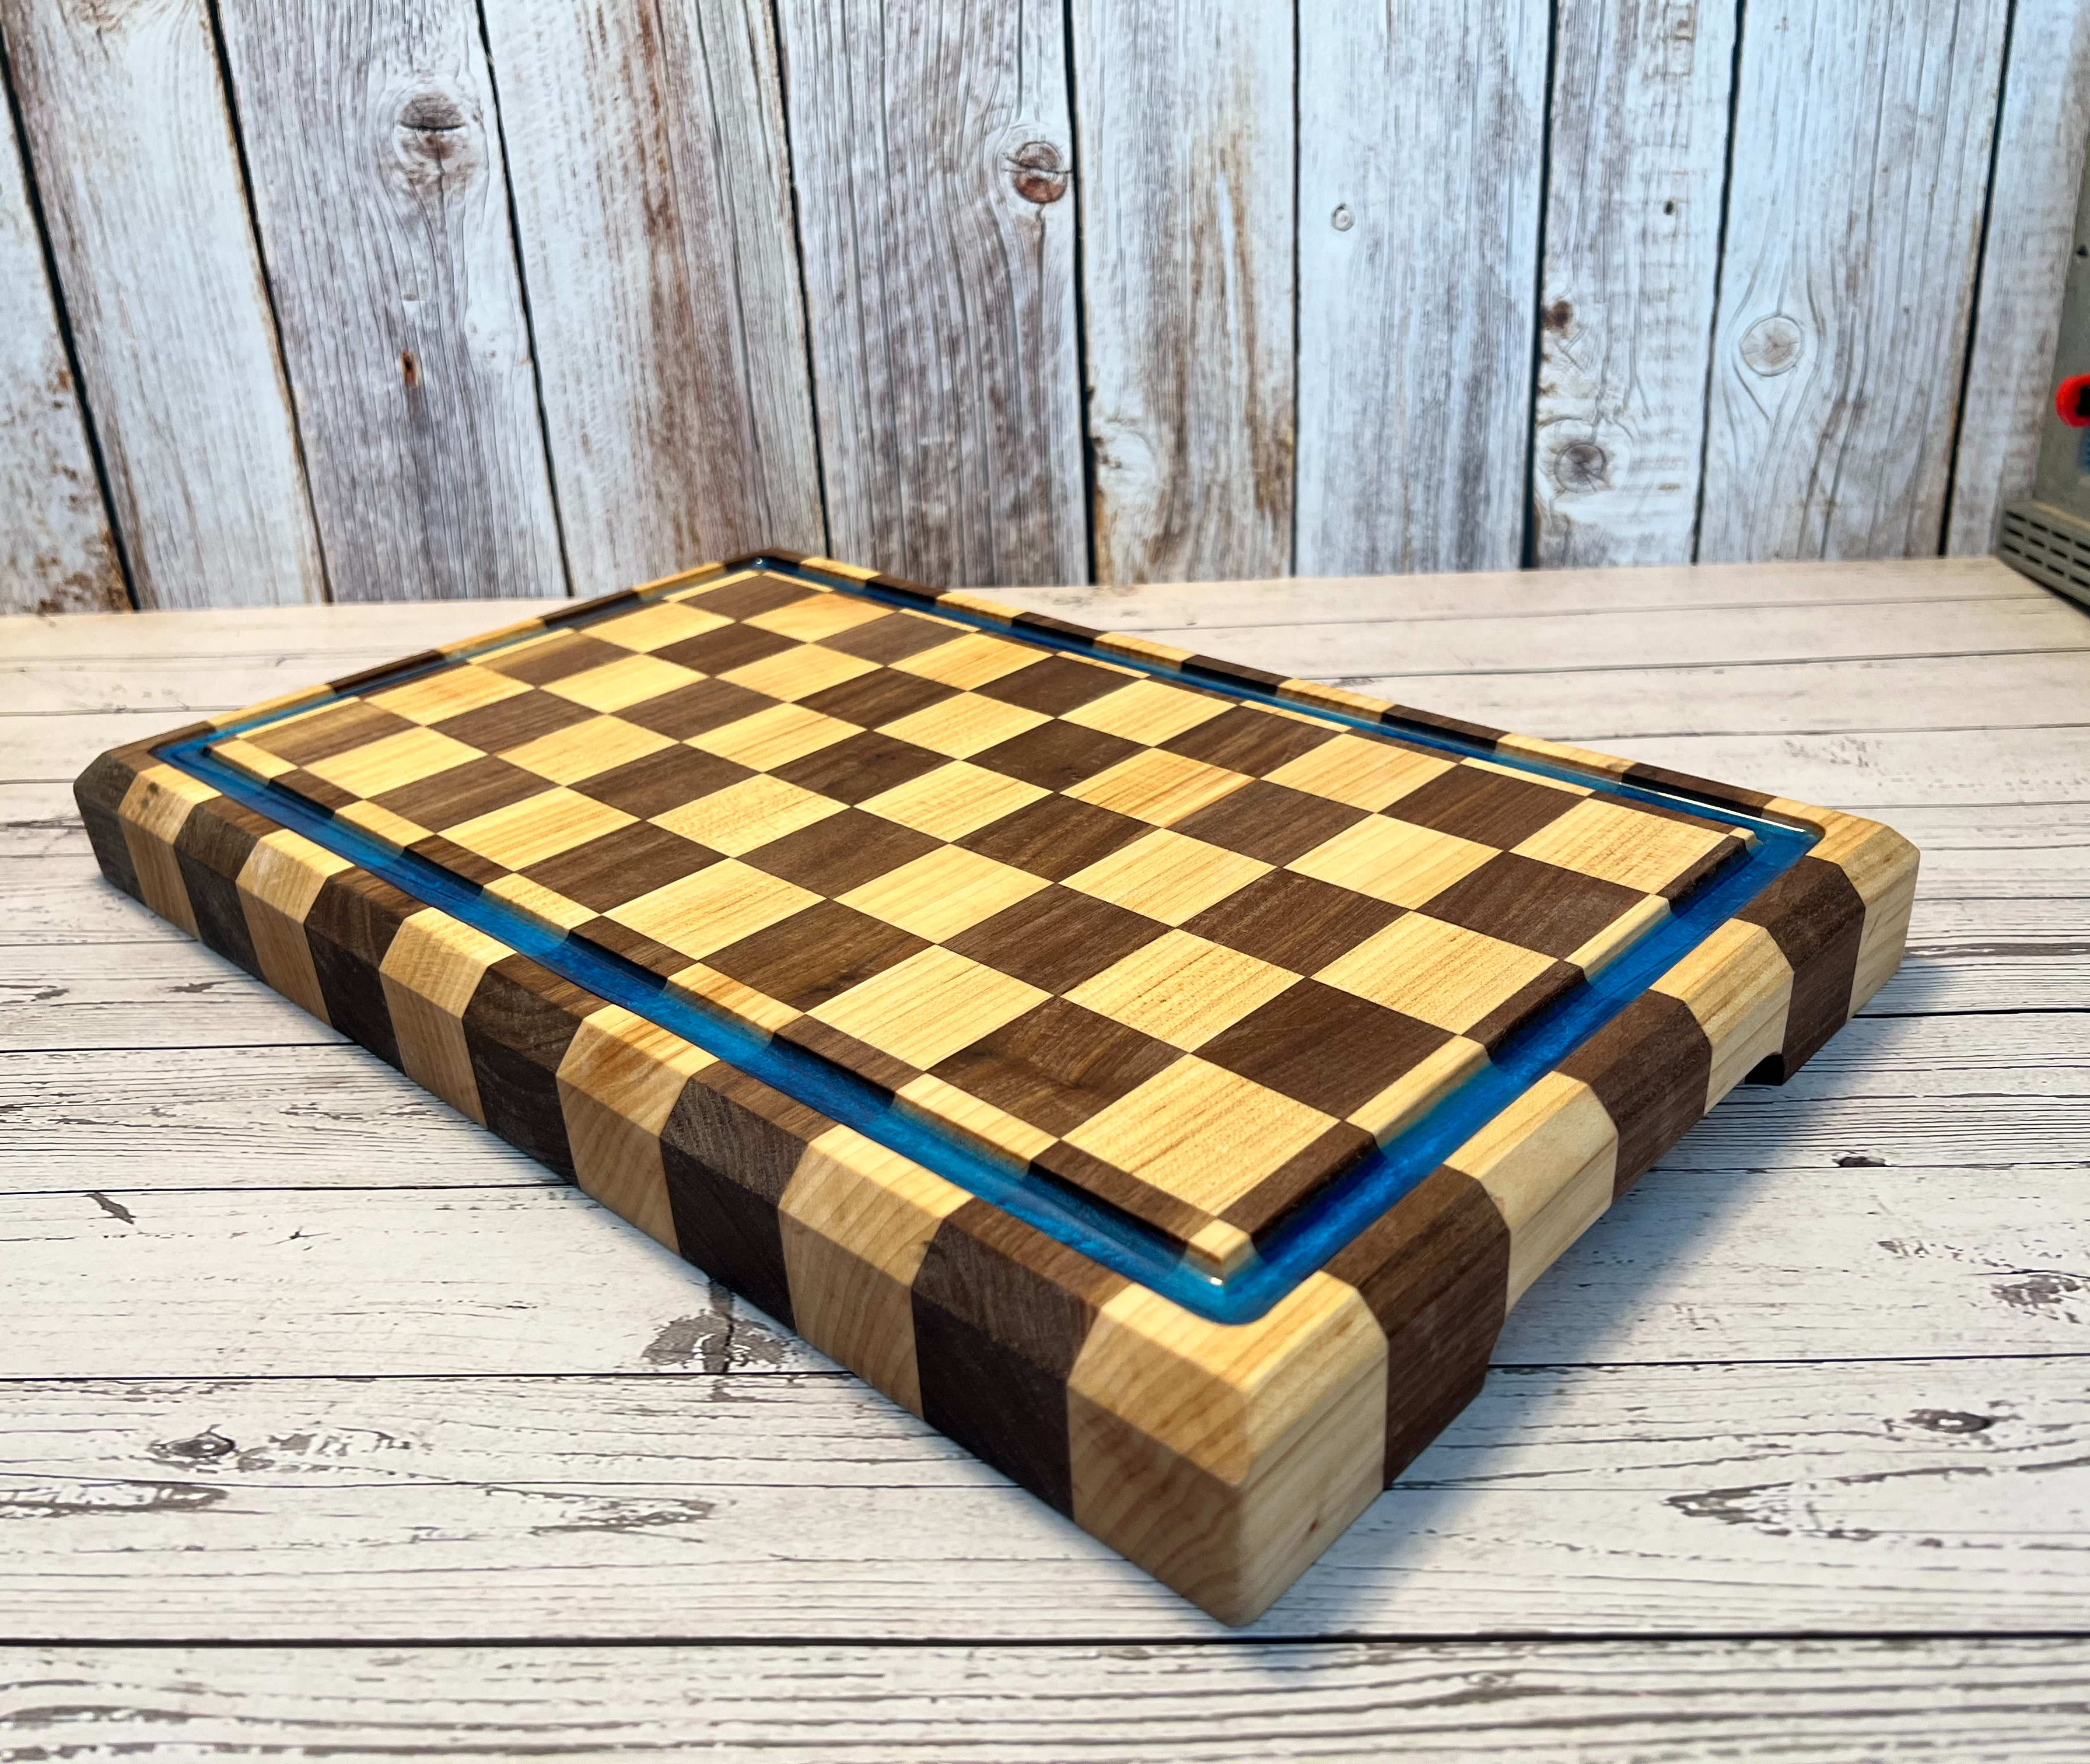 Checker Pattern Cutting Board – Hawk Woodworks